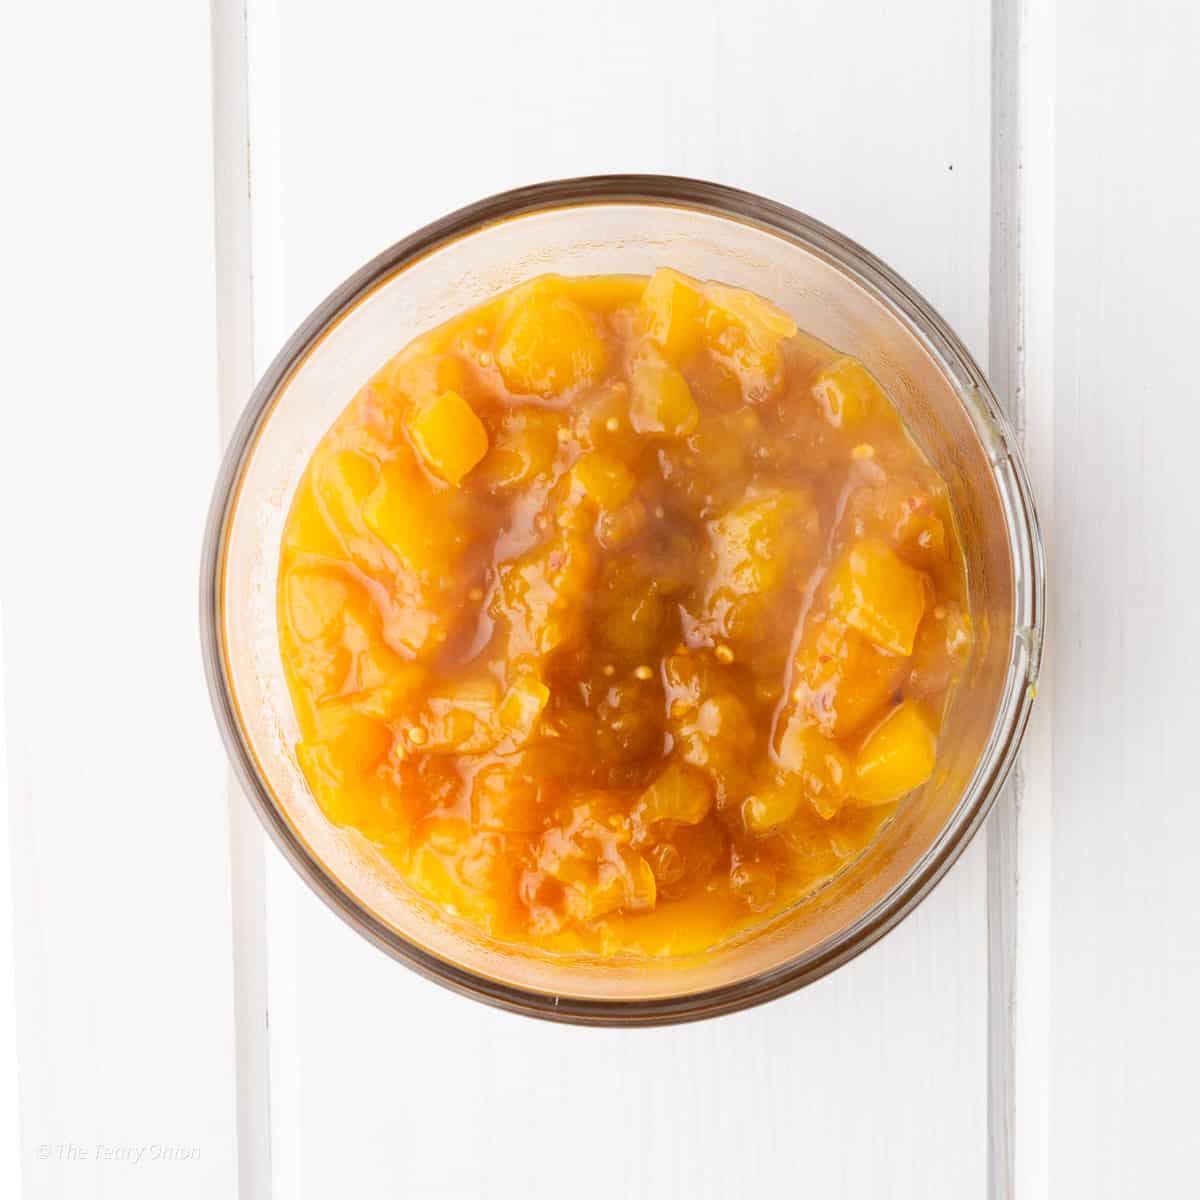 Homemade mango chutney in a clear glass dish.